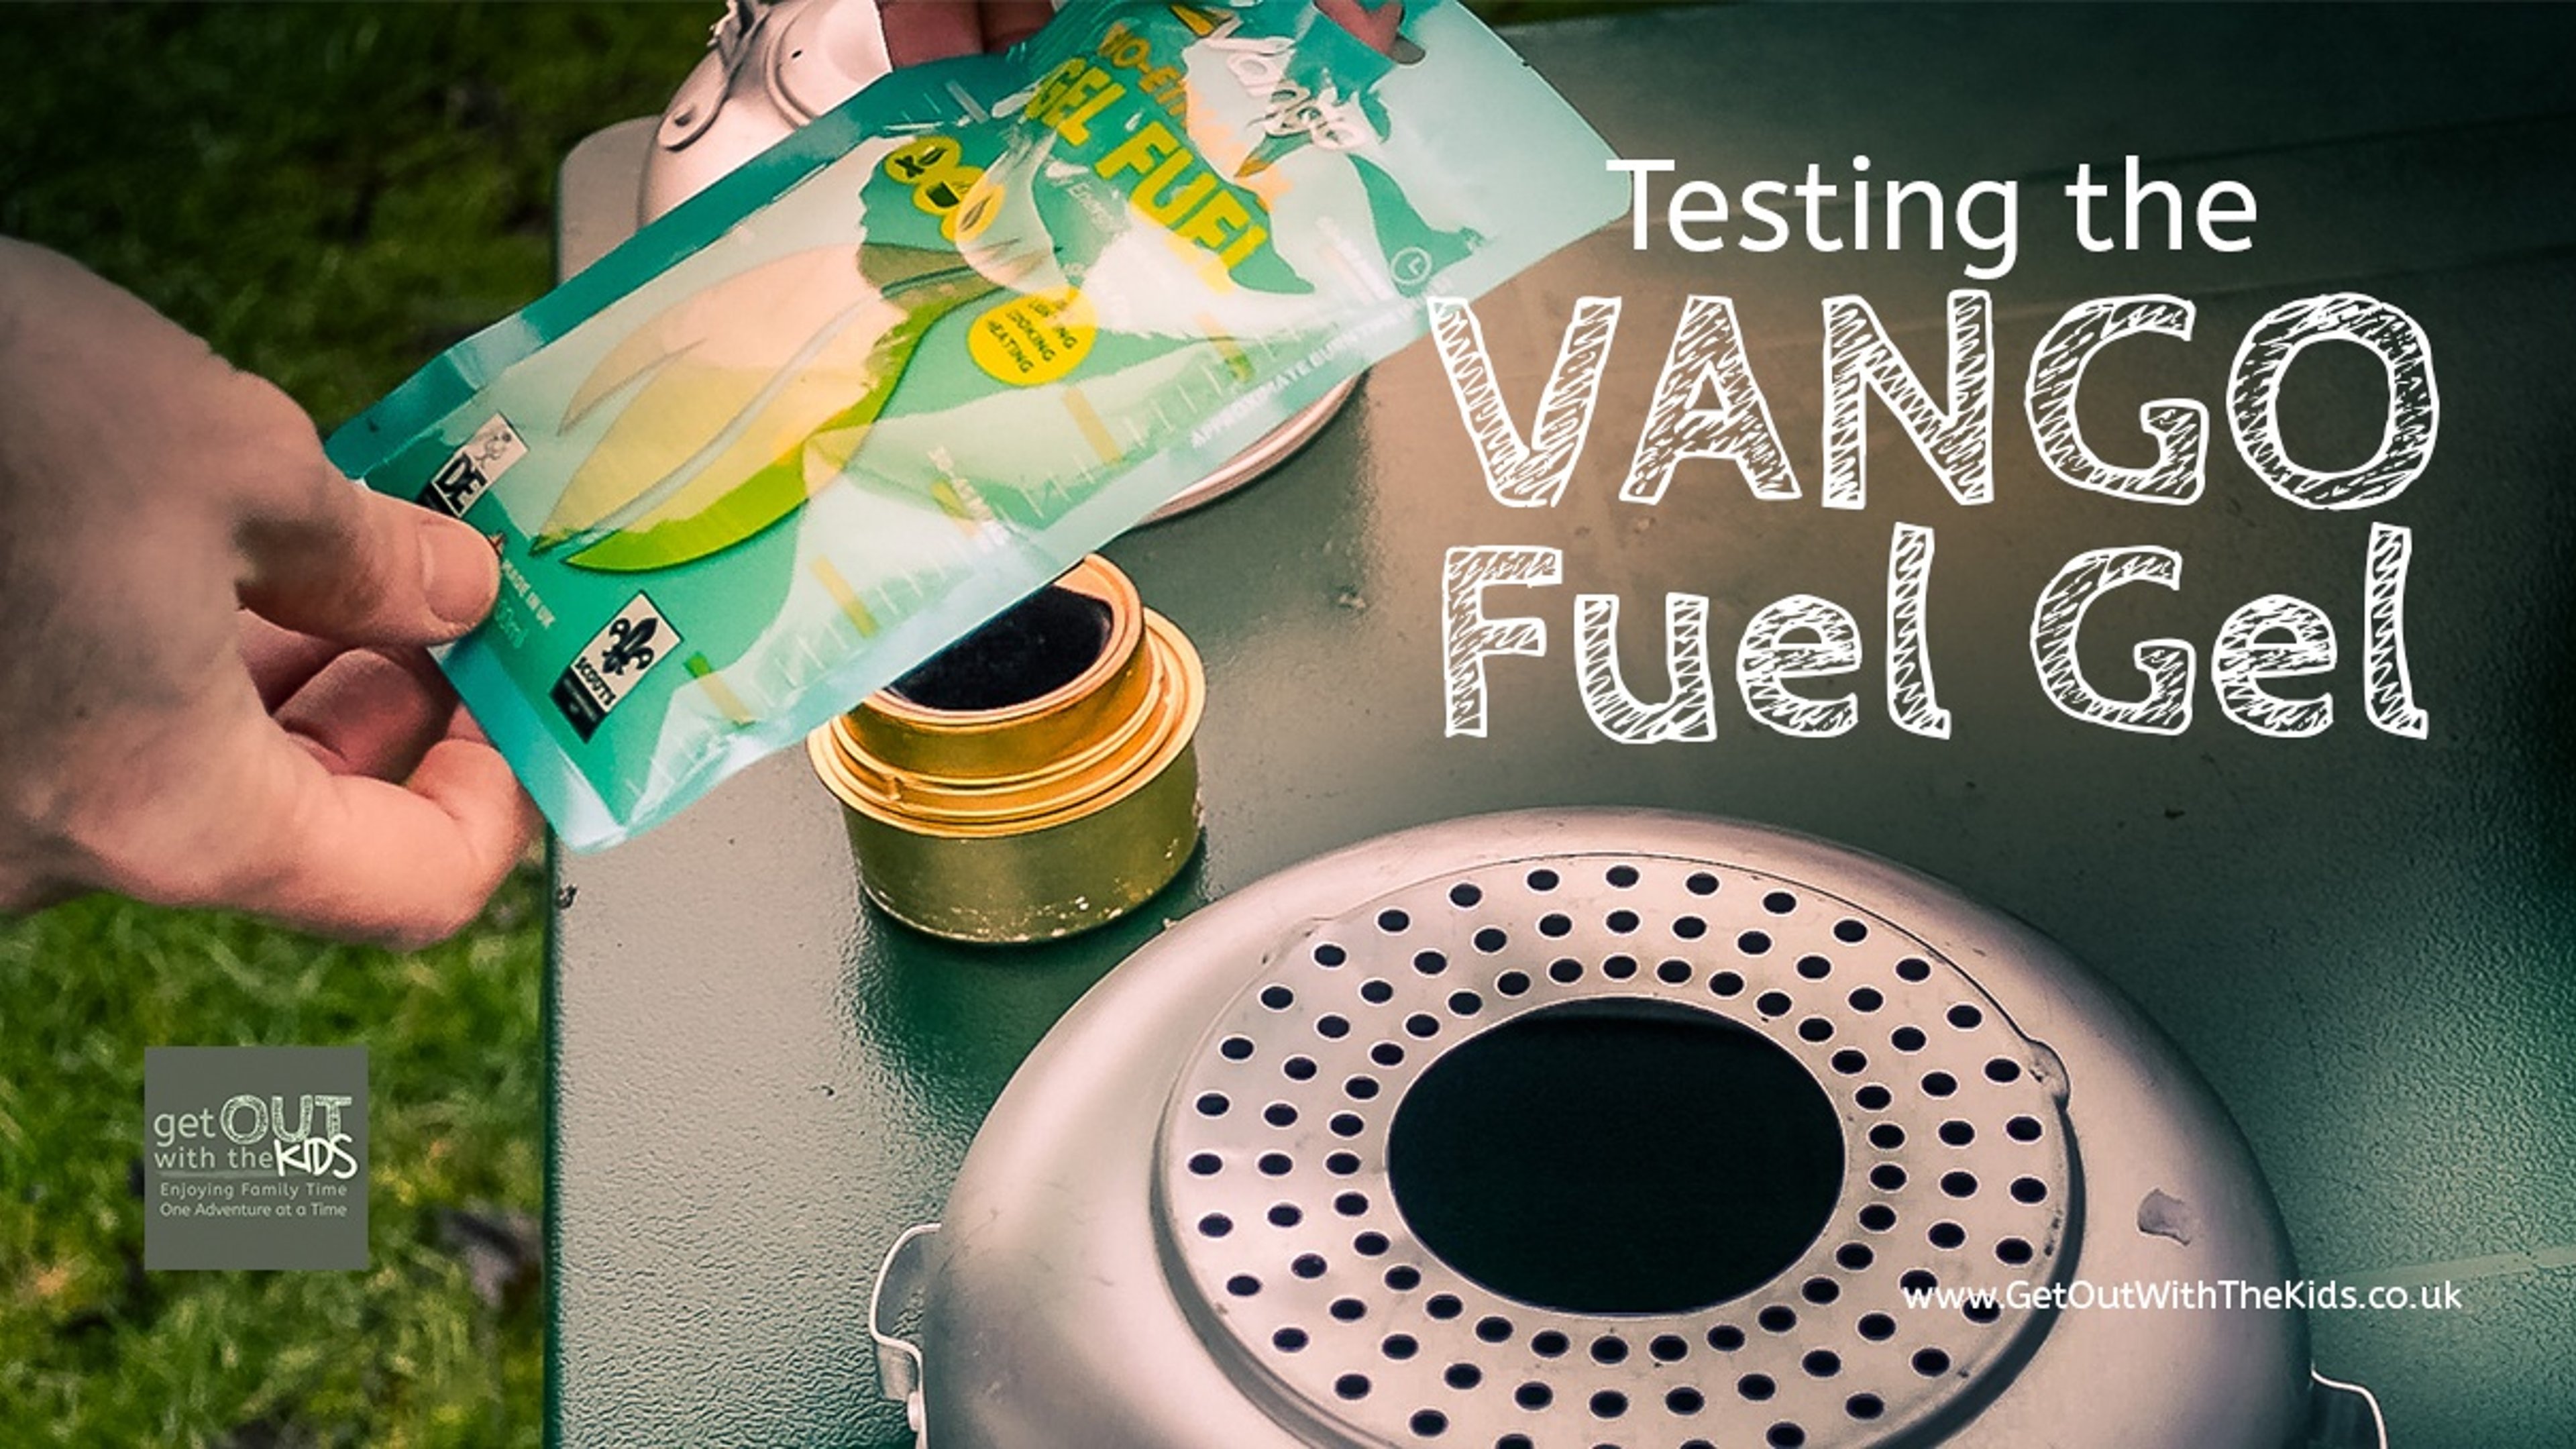 Testing the Vango Fuel Gel